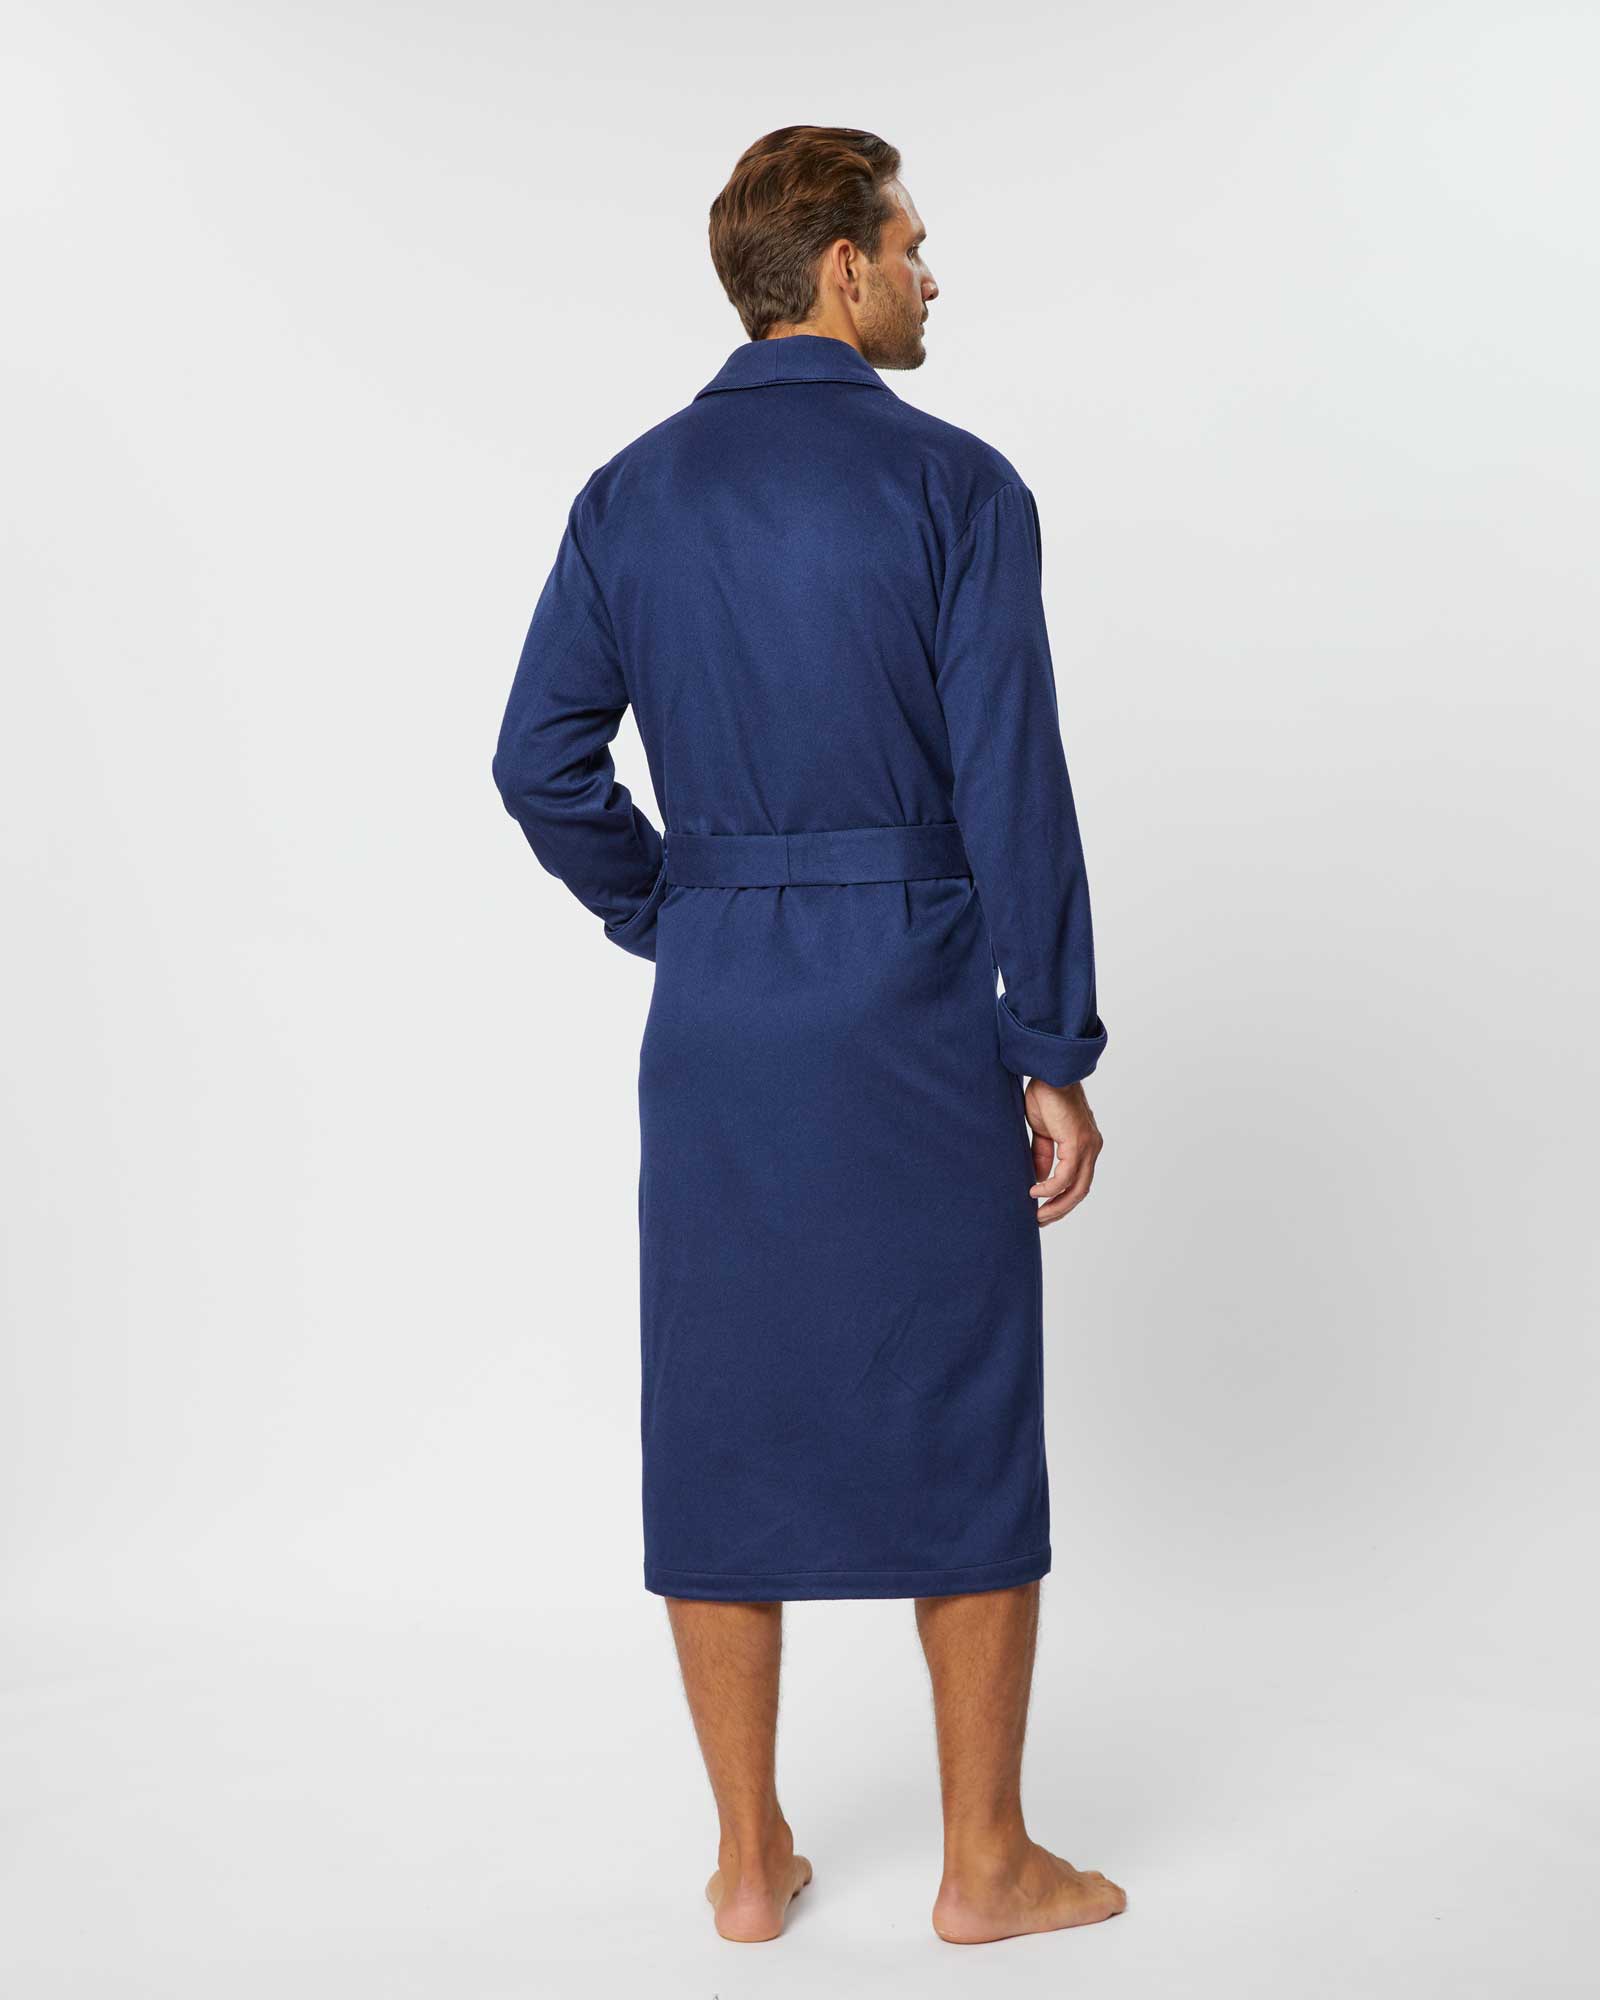 Navy Mens Unisex Dressing Gown Luxury Fleece Robe Bathrobe S to 5XL | eBay